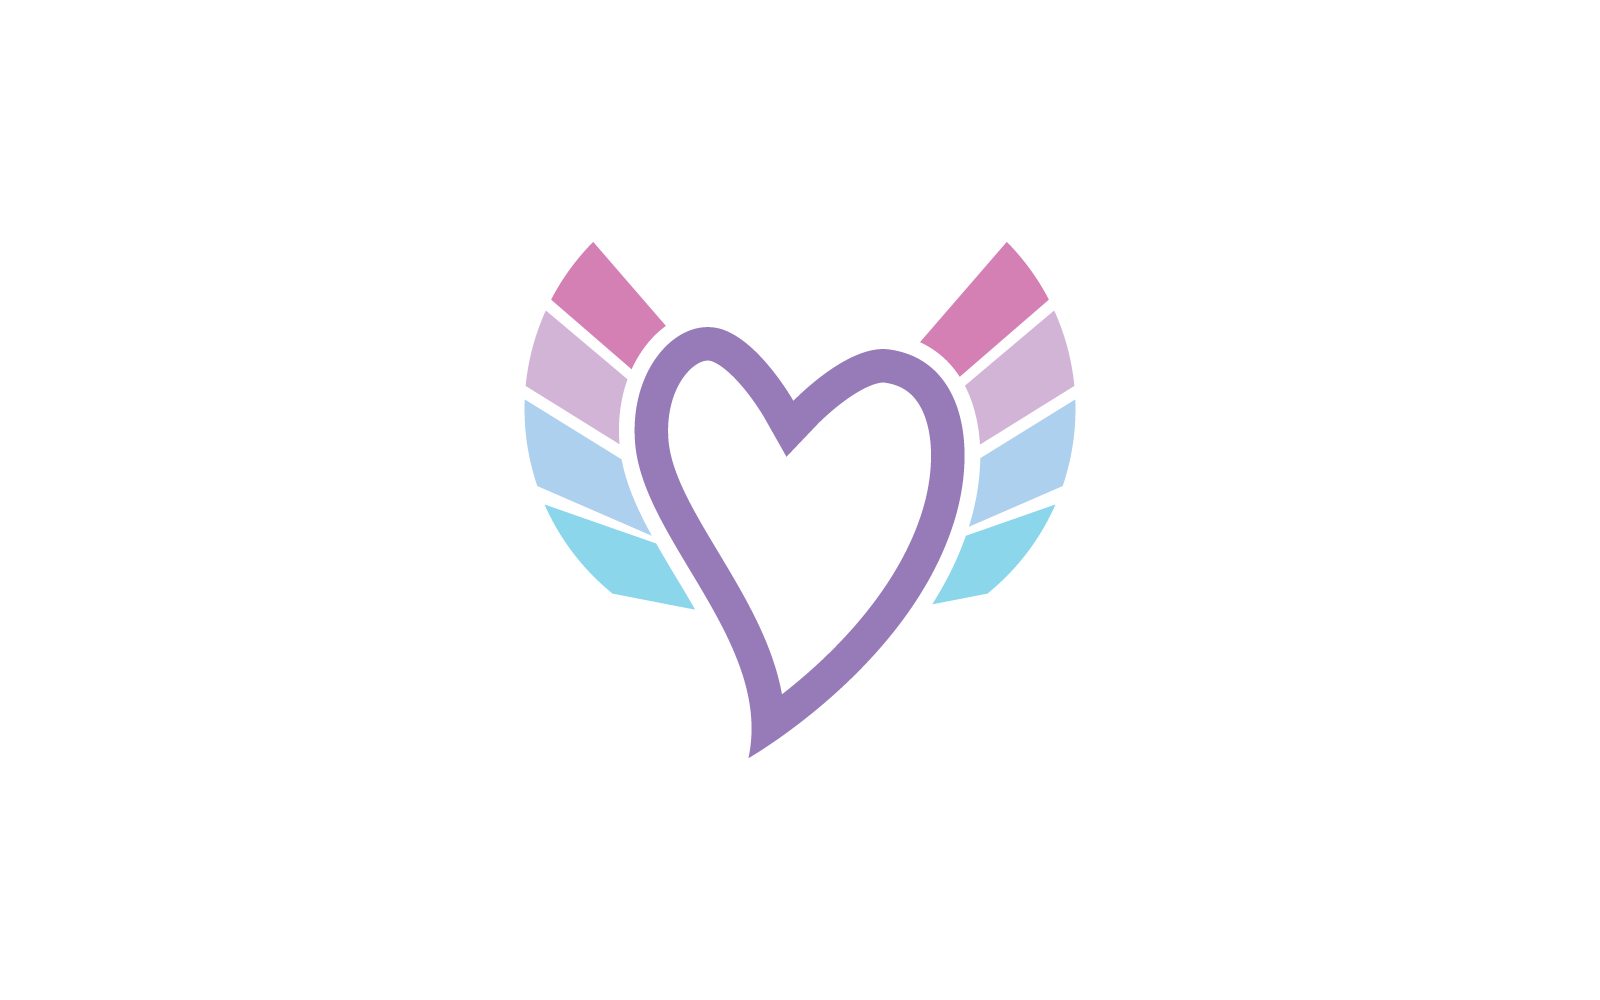 Love design vector illustration logo template